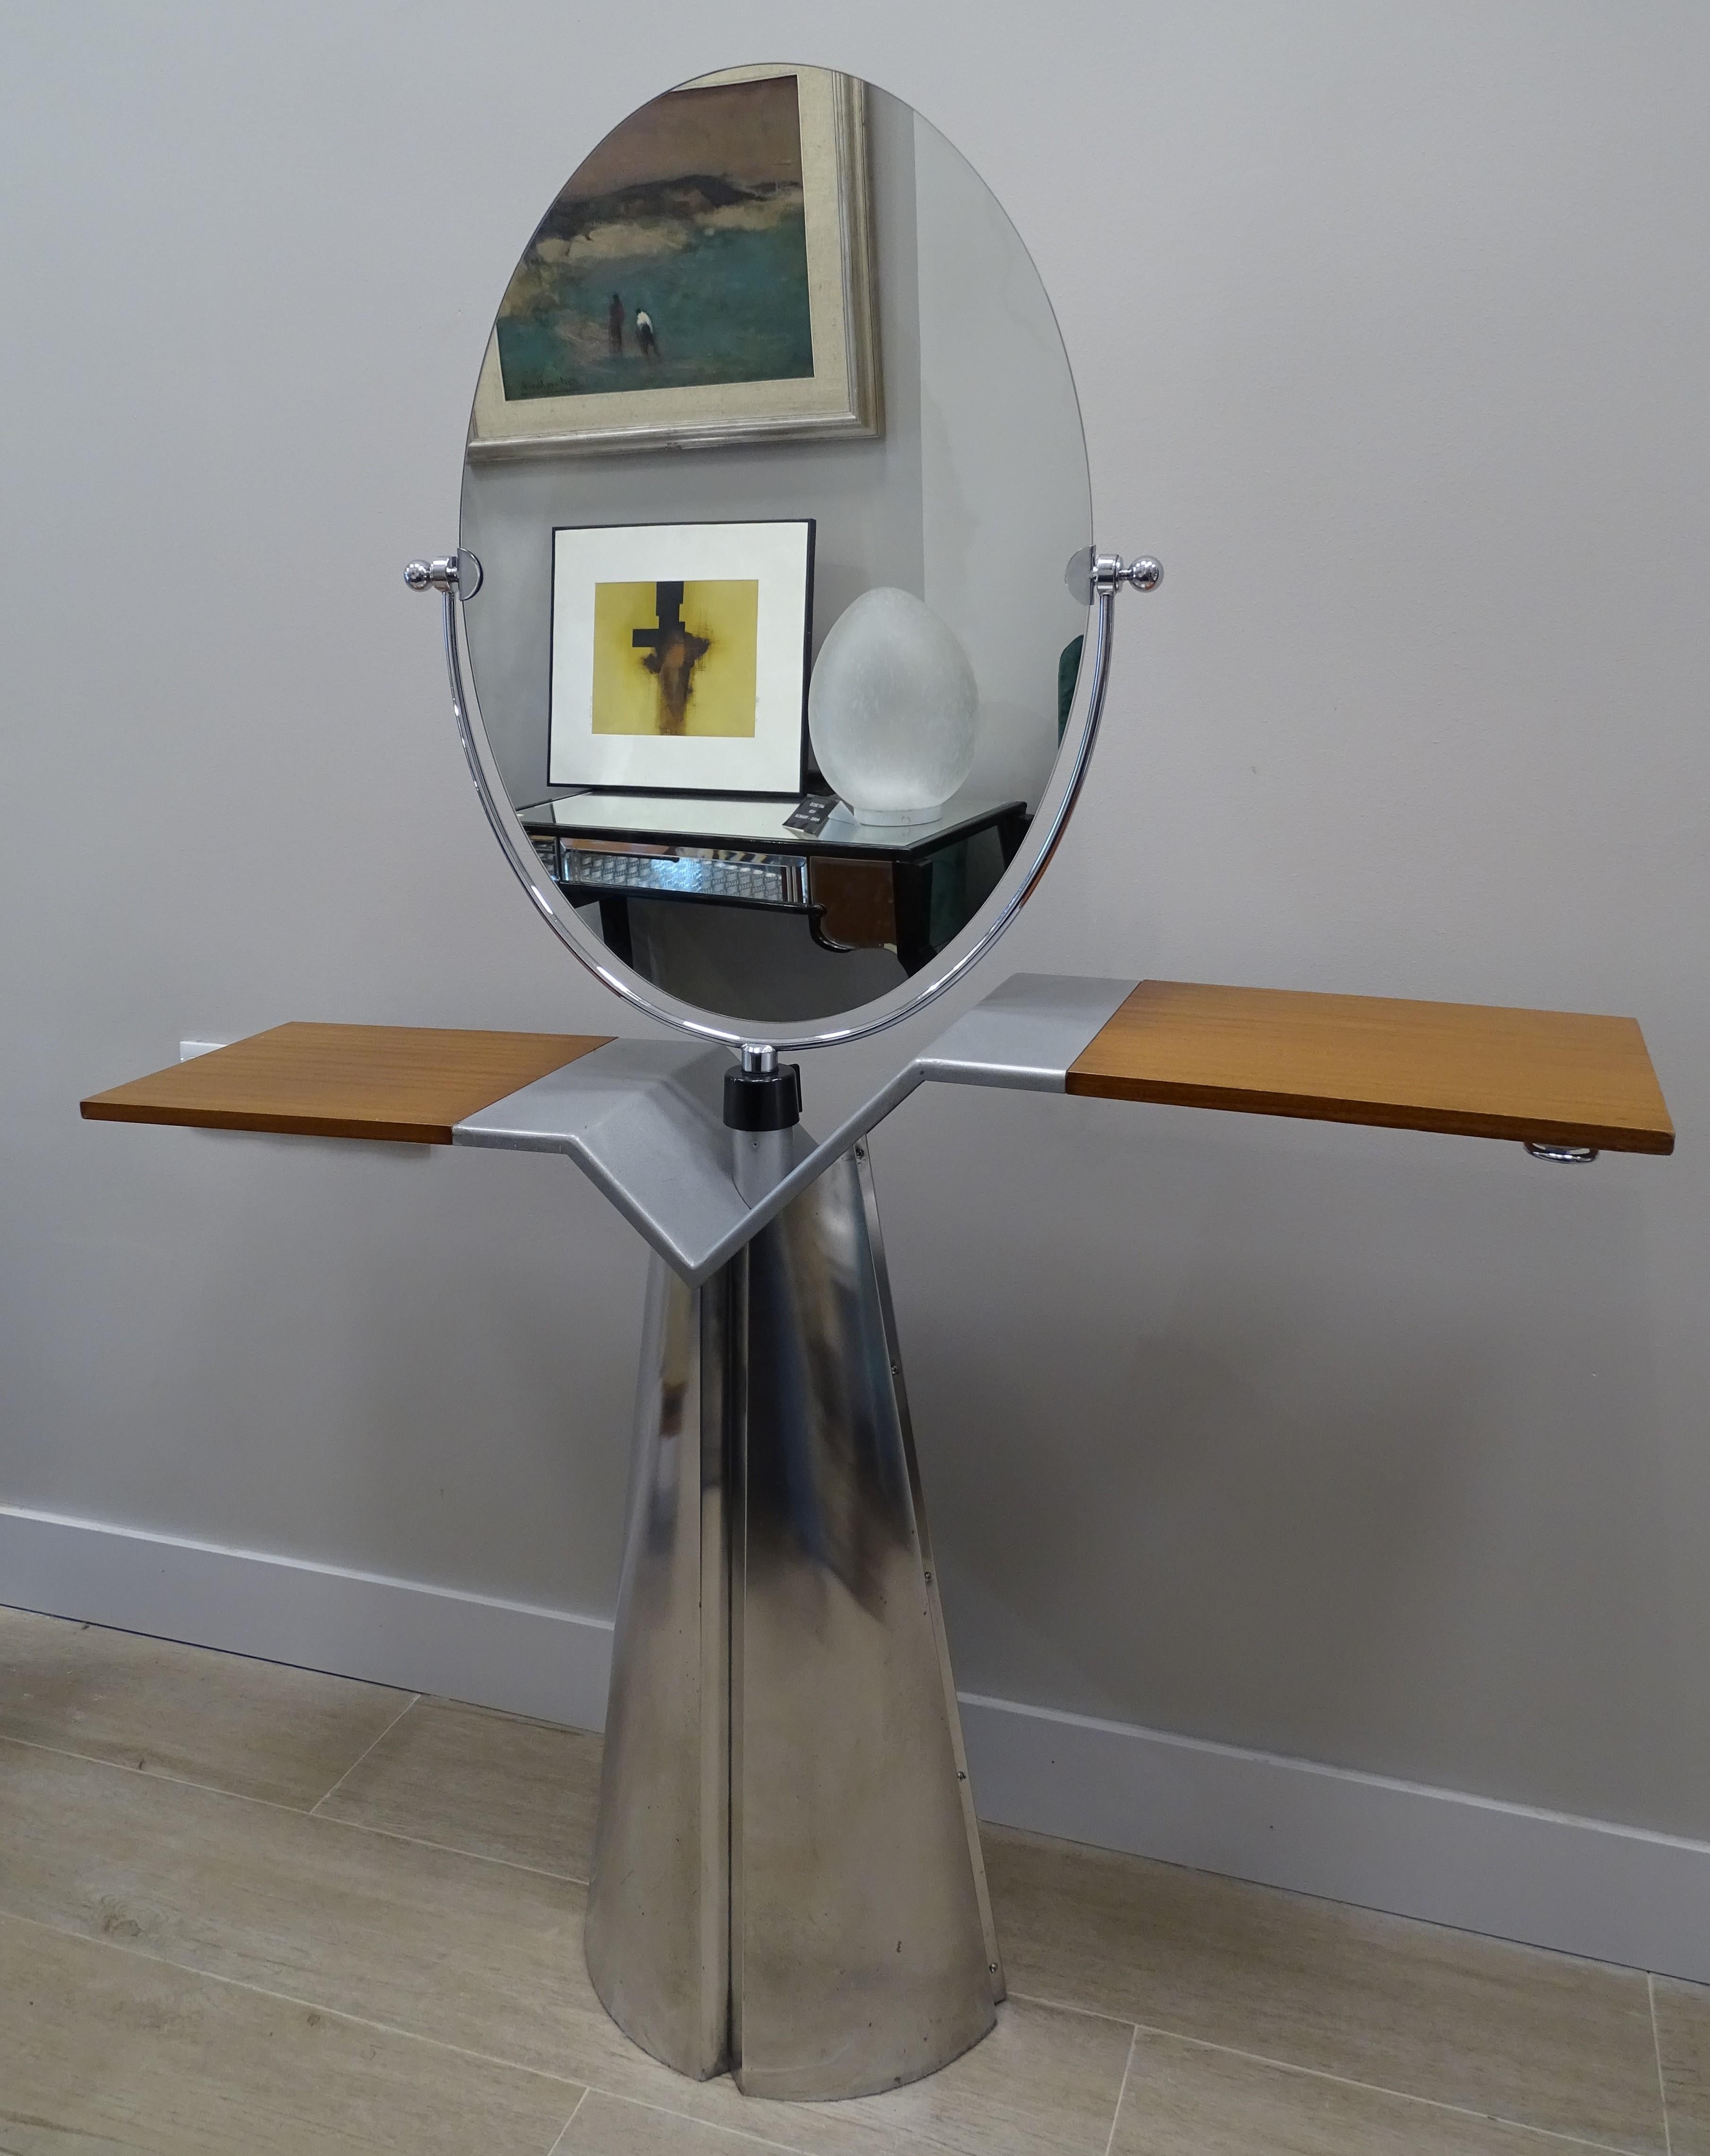 Angel Mirror / Dressing Table, design Matta & Varaschin for Maletti Presence, 80's
Italian Design
Amazing Angel mirror,dressing table , designed by Matta & Varaschin for Maletti Presence in the 80s.

Spectacular 360-degree rotating double-sided